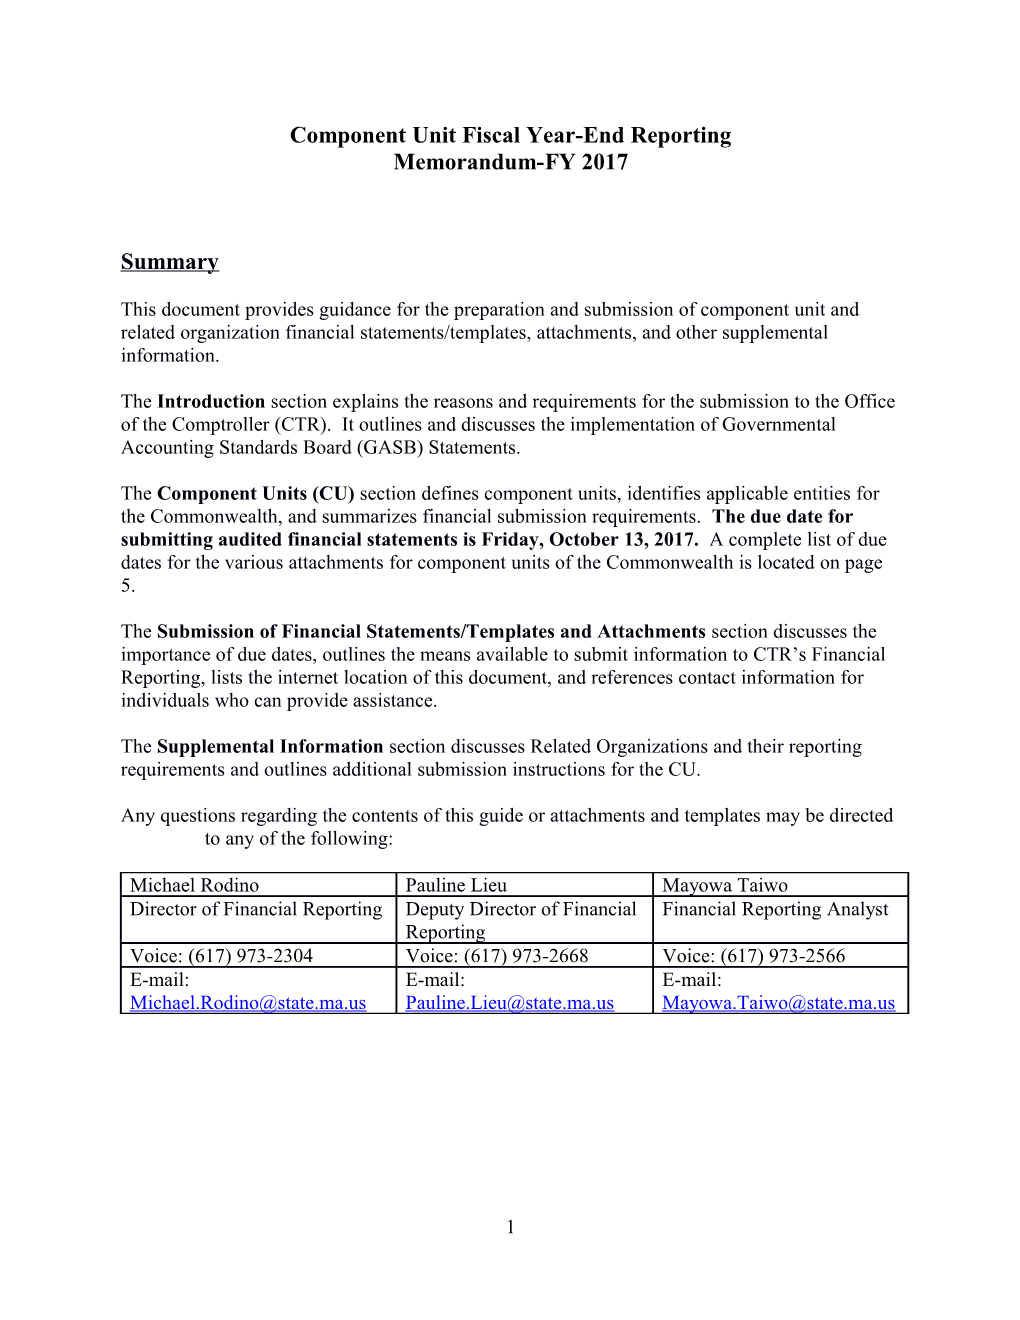 Component Unit Year-End Reporting Memorandum FY 2009